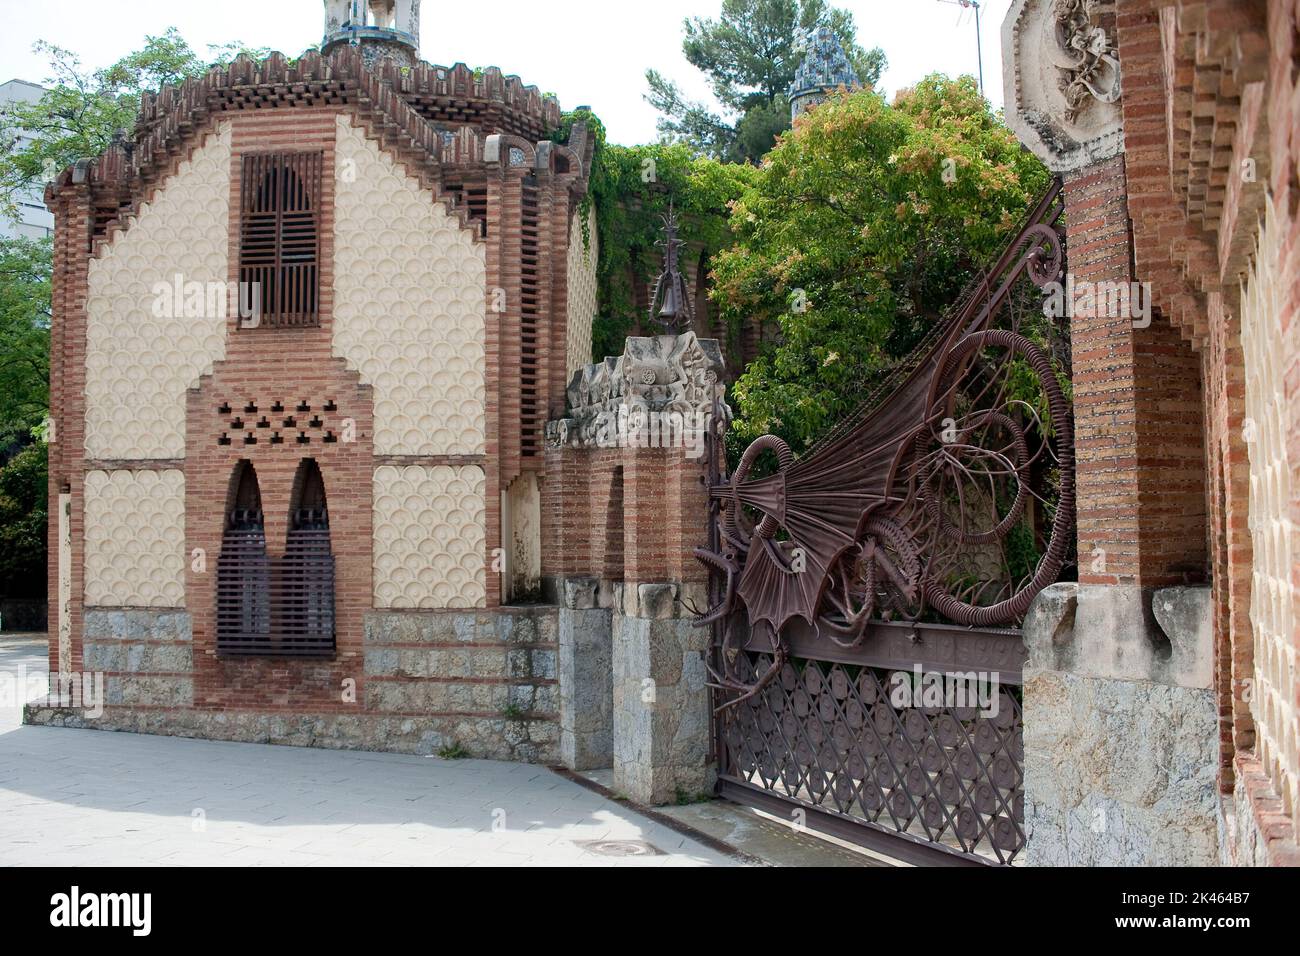 Antoni Gaudi/ Finca Guell, dragon de forja. Modernismo. Barcelona, 1885. Stock Photo